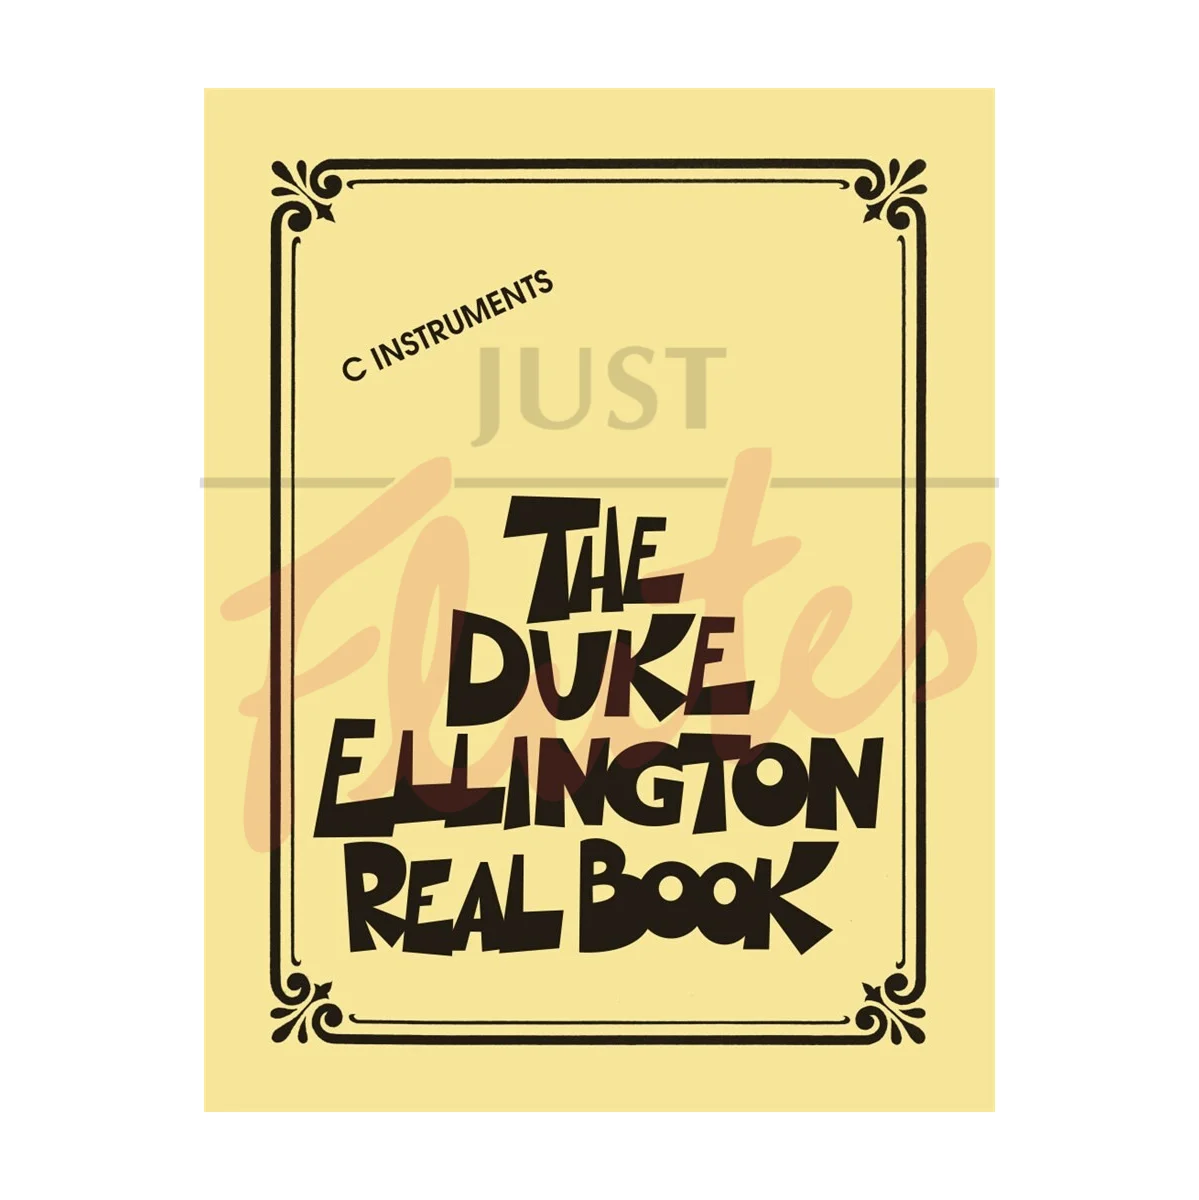 The Duke Ellington Real Book for C Instruments